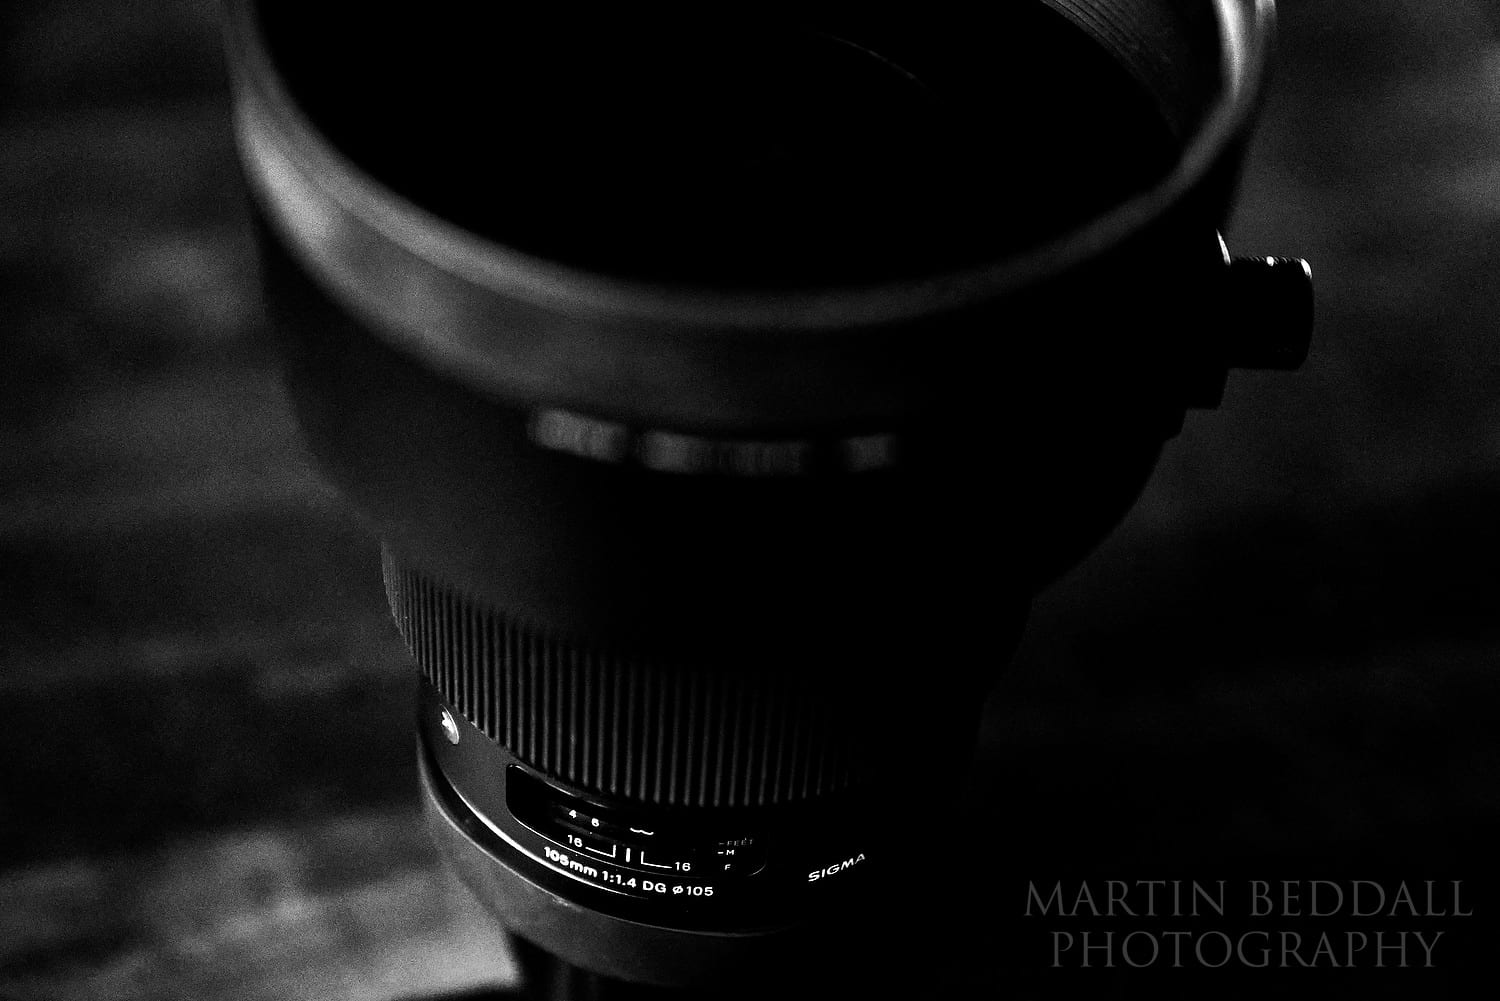 Sigma 105mm f1.4 DG HSM Art Lens for the Sony E-mount